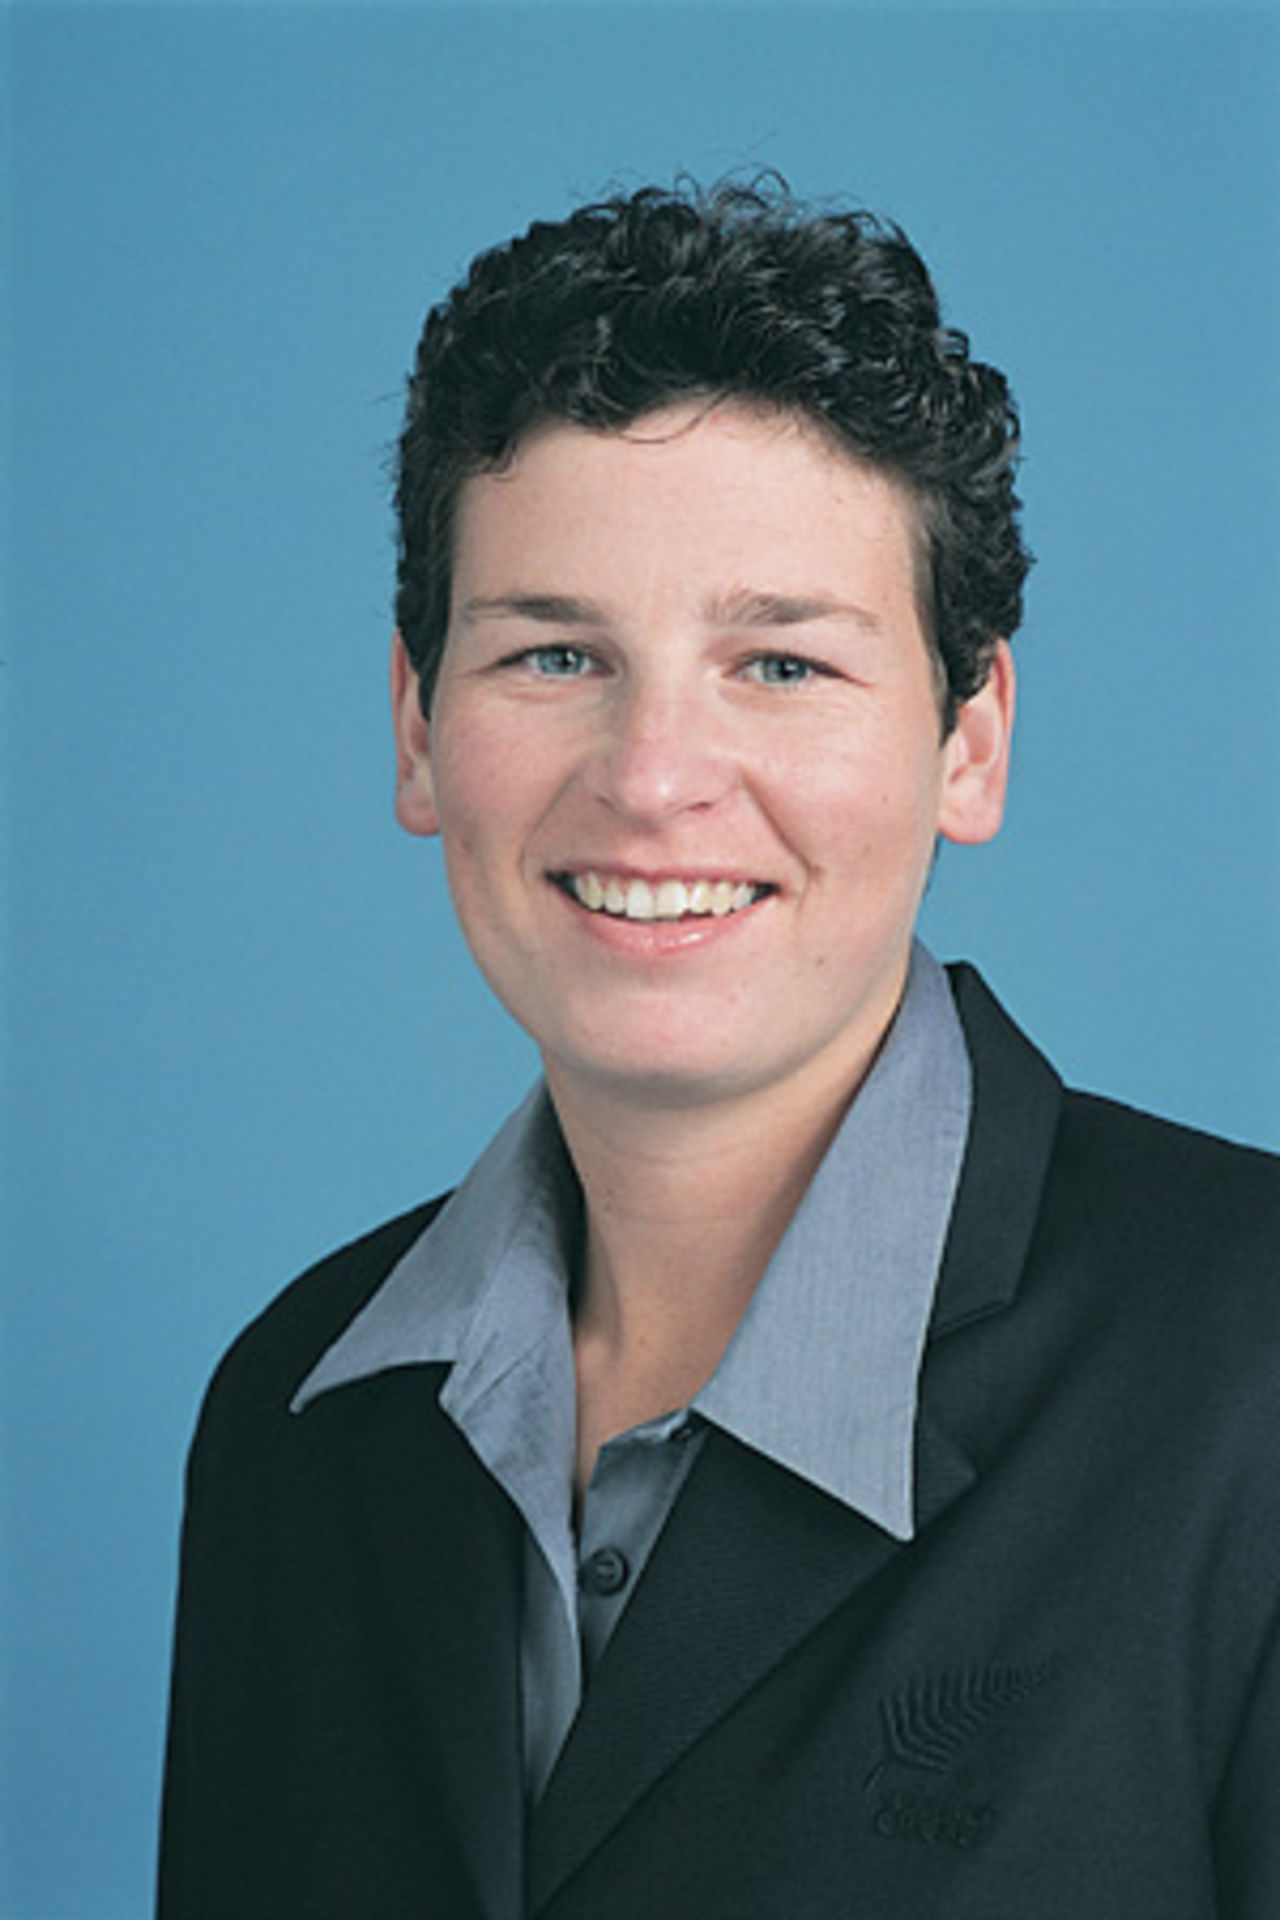 Portrait of Rachel Pullar - New Zealand women's player in the 2002 season.